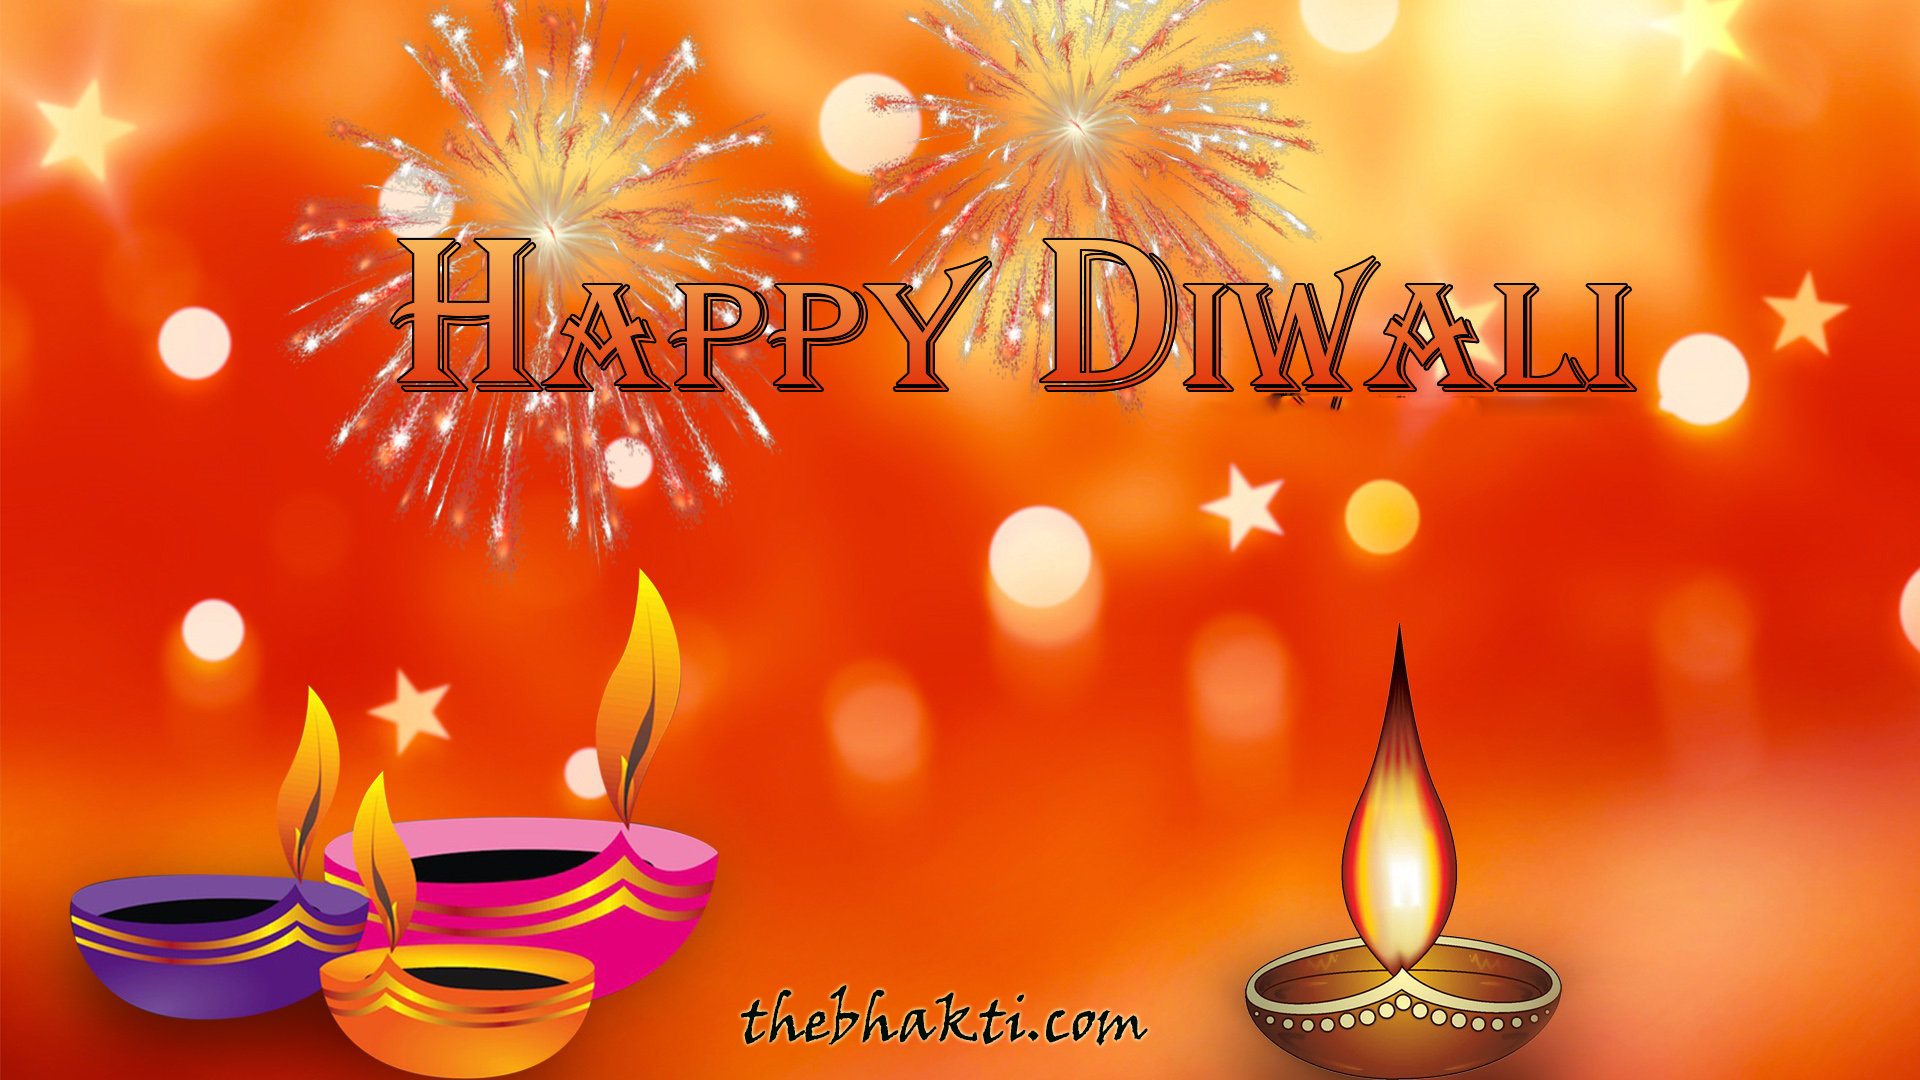 Diwali Lamps - Diwali Images Hd Free Download - 1920x1080 Wallpaper -  